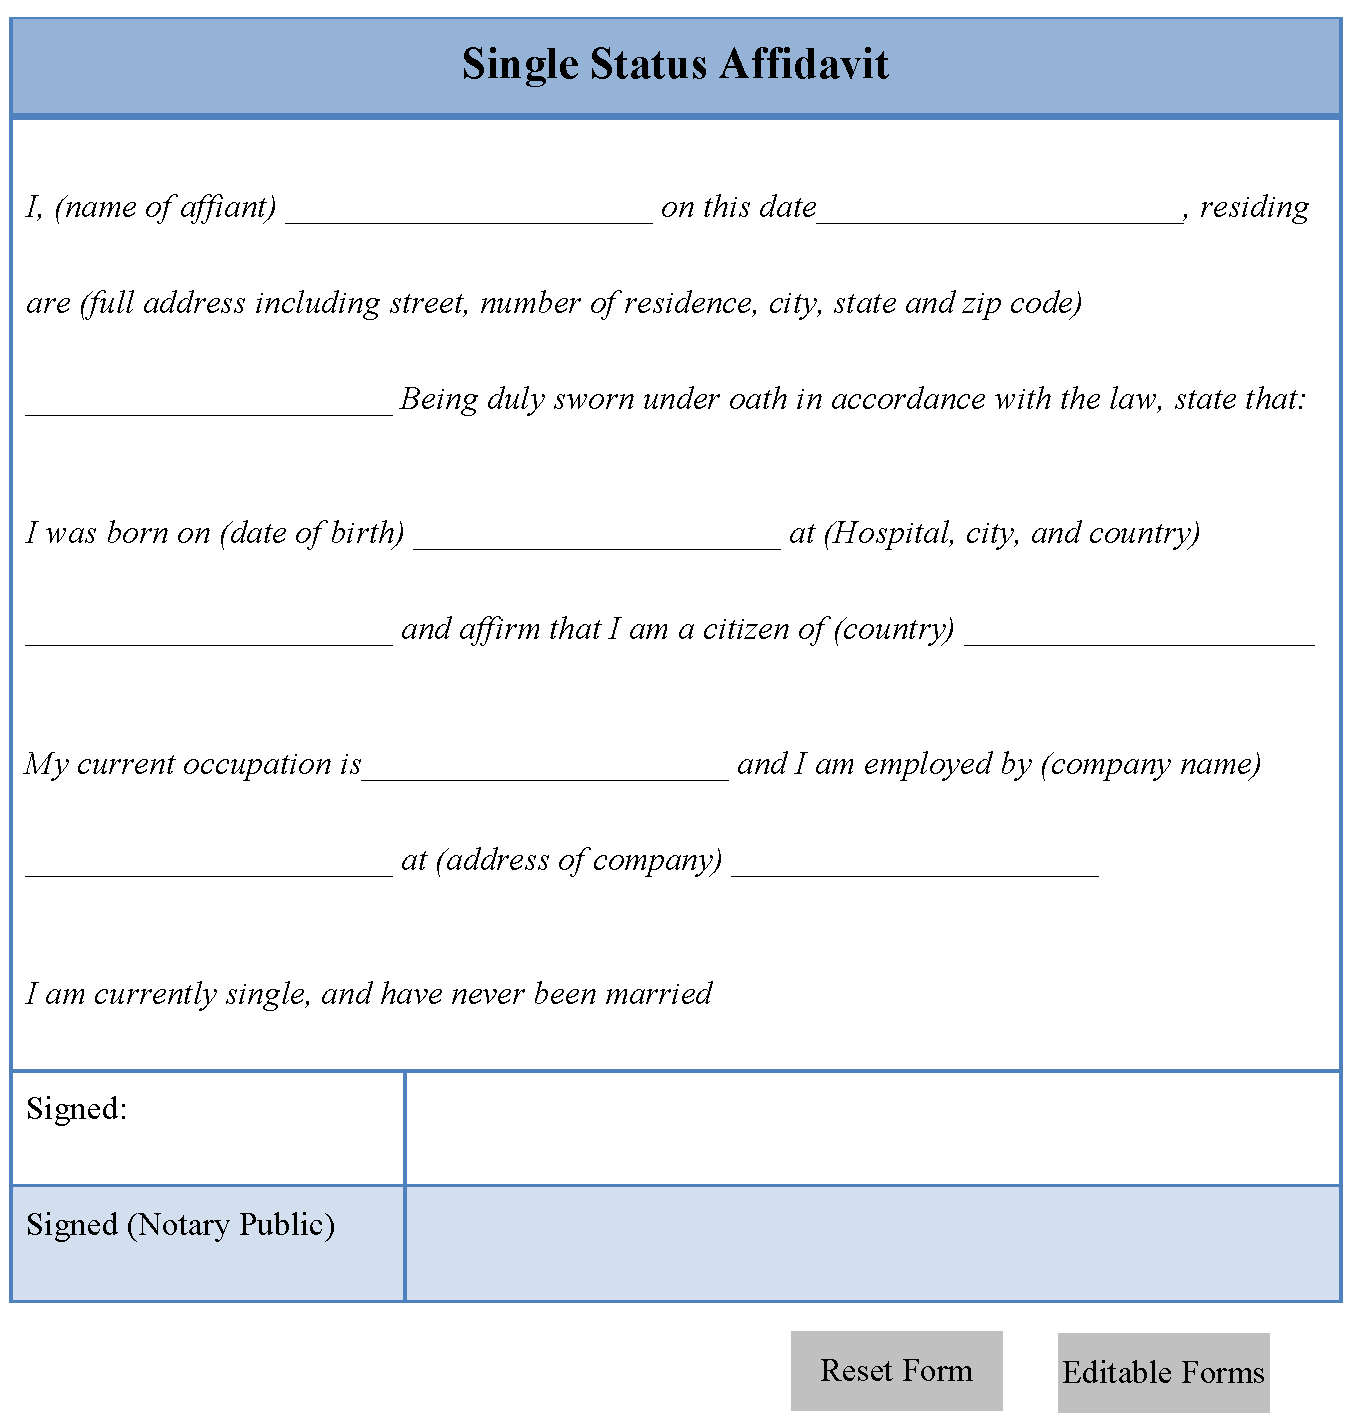 single-status-affidavit-form-editable-forms